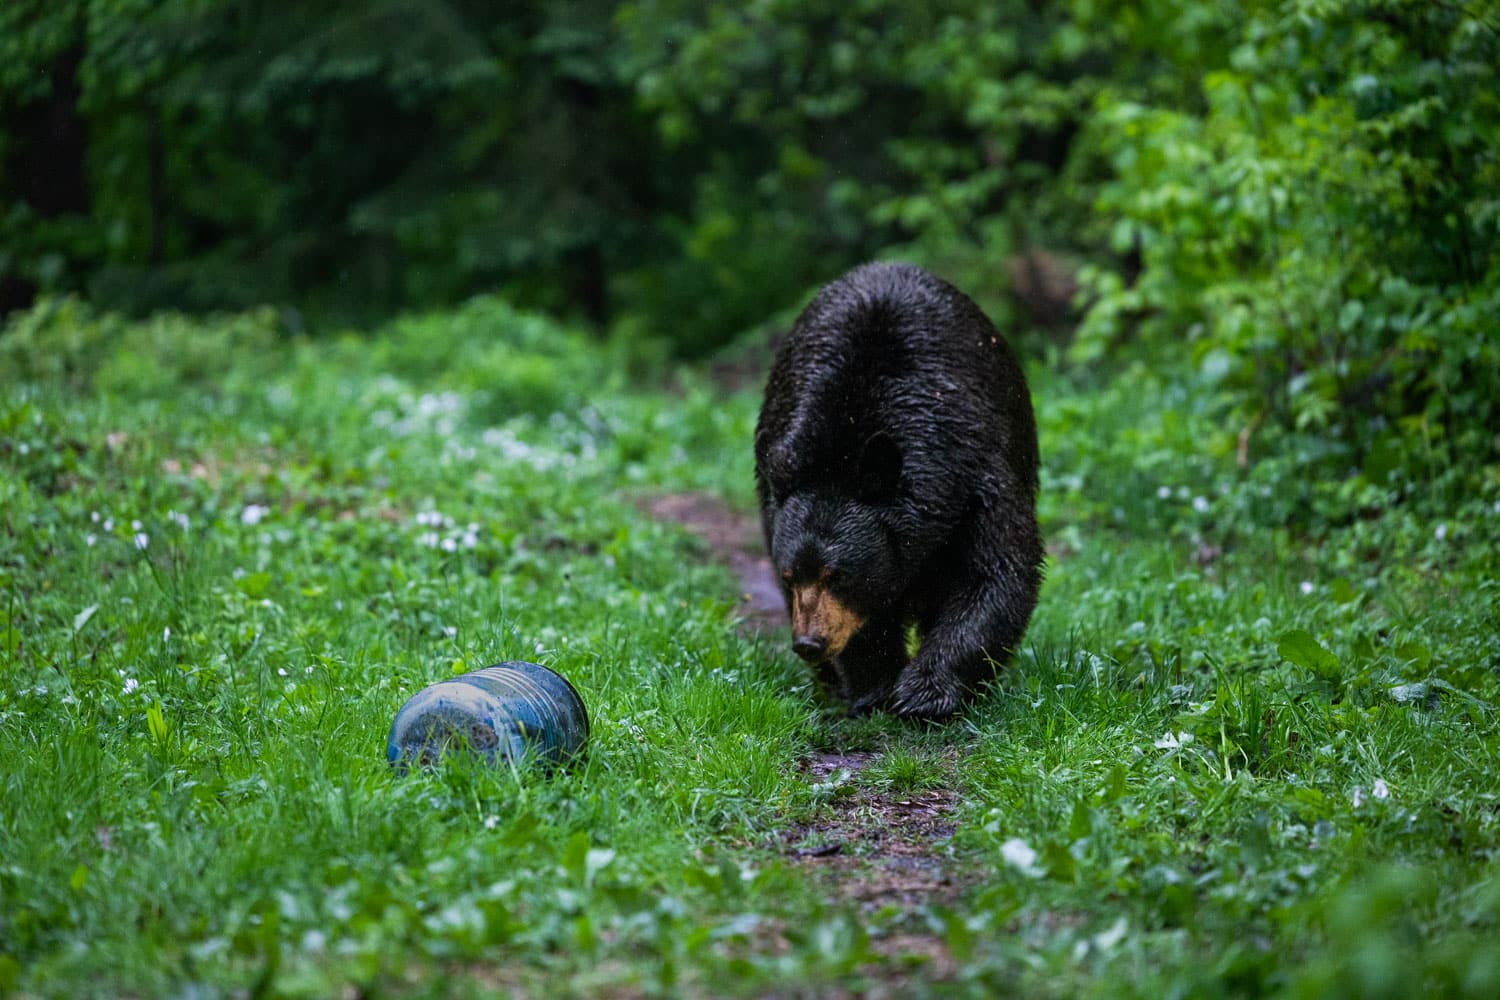 A black bear approaches a bear canister